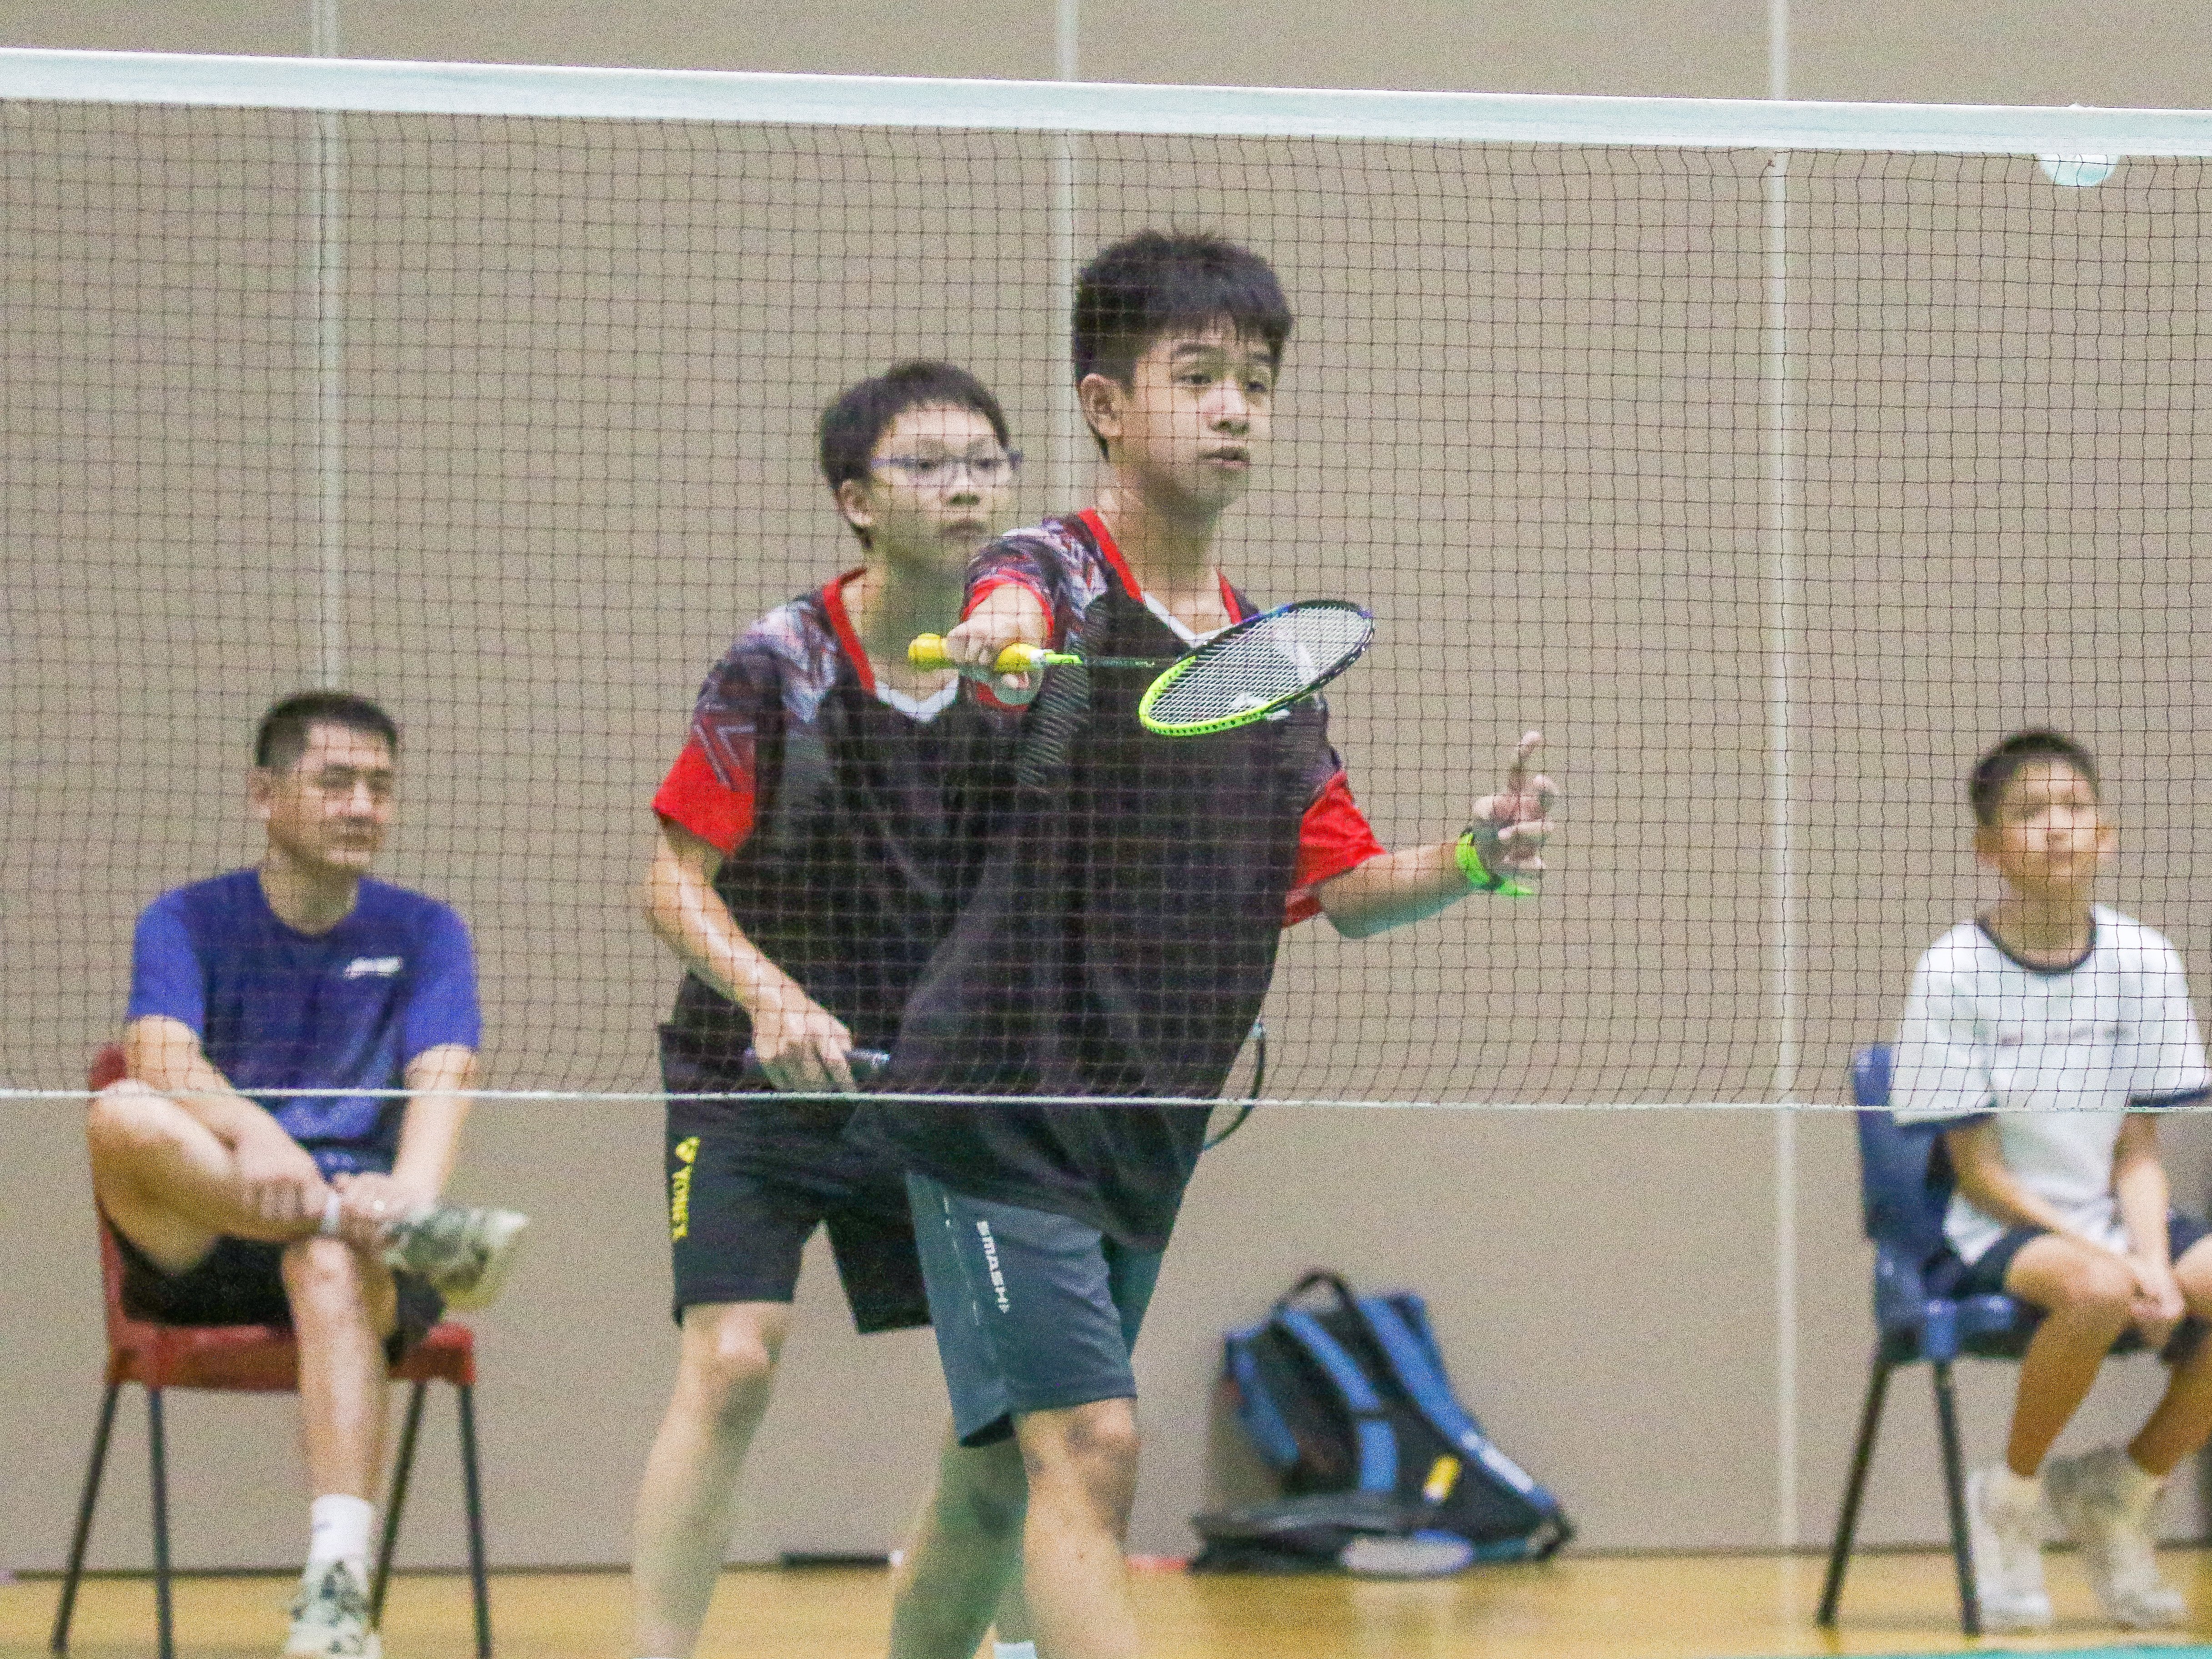 2023-05-17_Badminton_By Chin KK_IFP_1833_edited